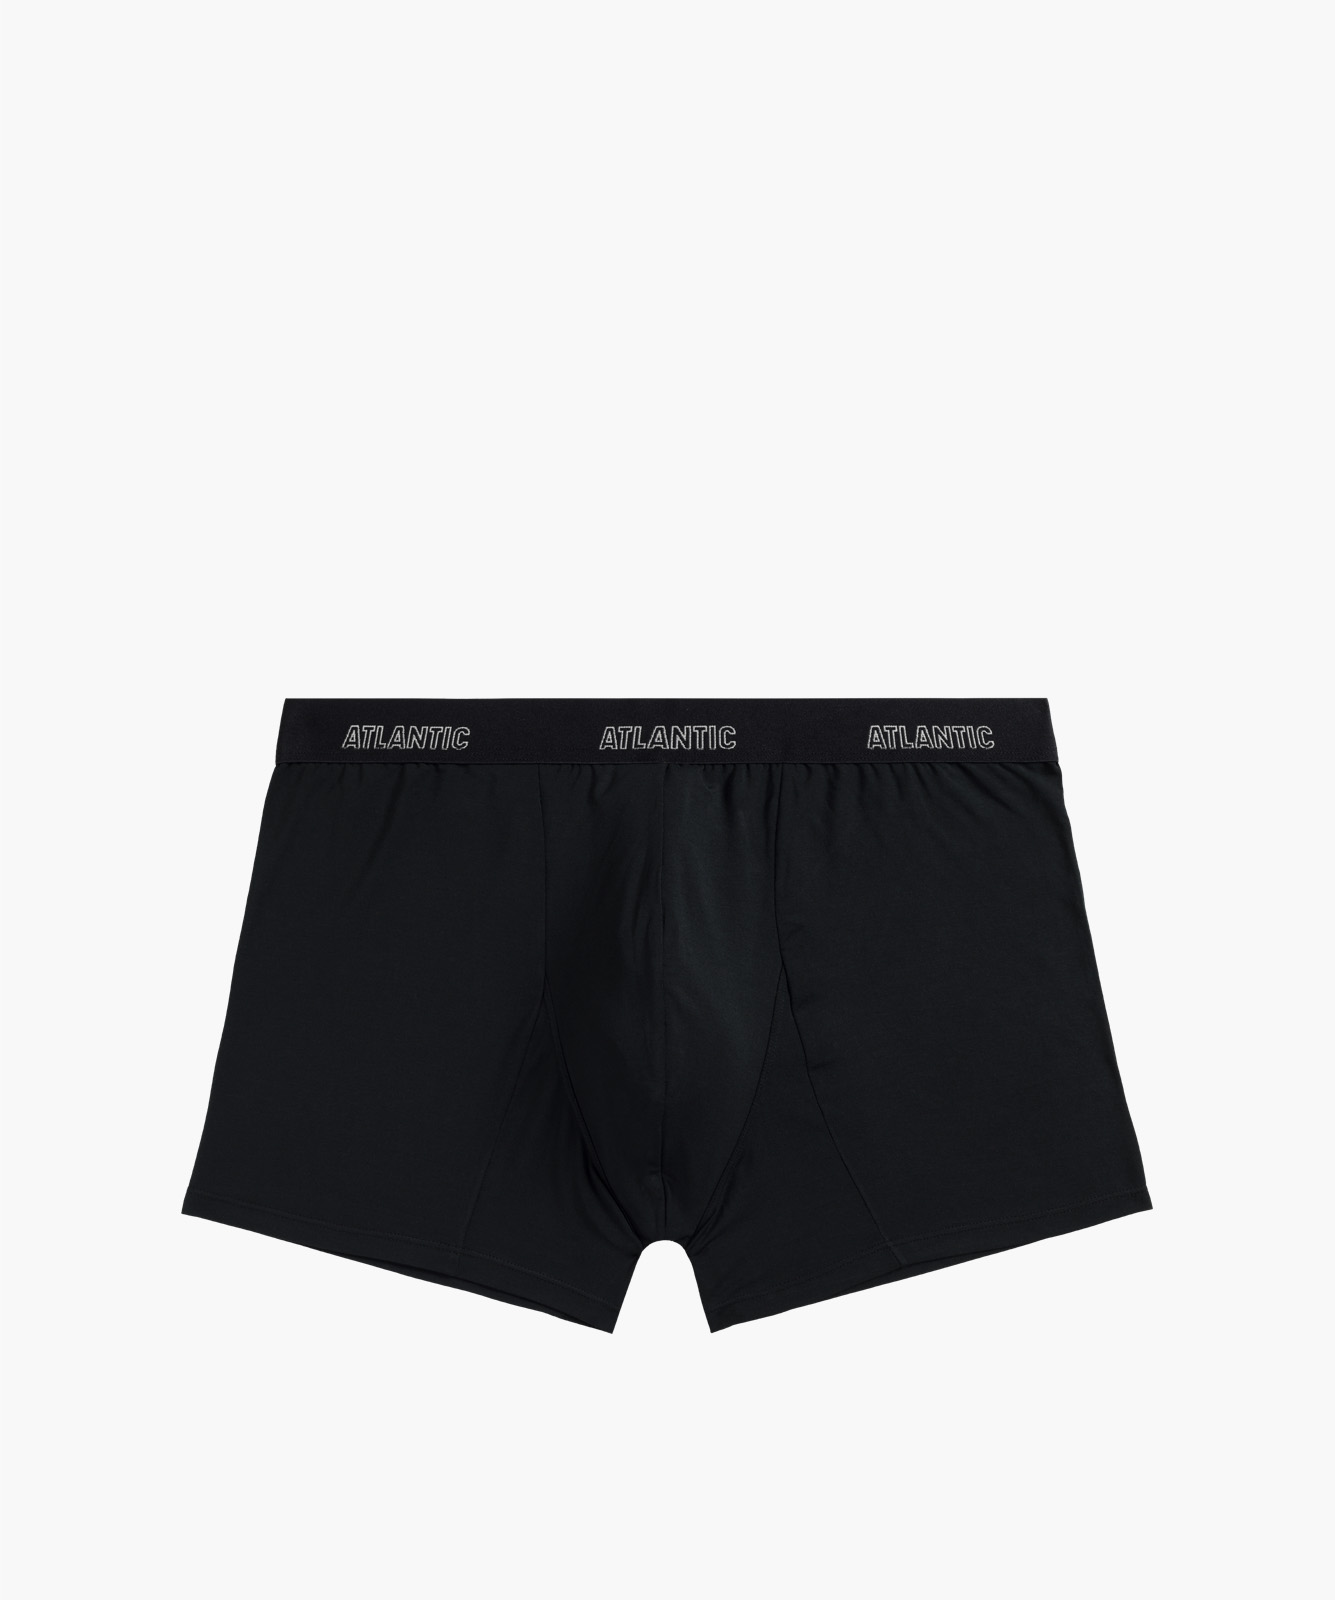 Men's boxers ATLANTIC - black